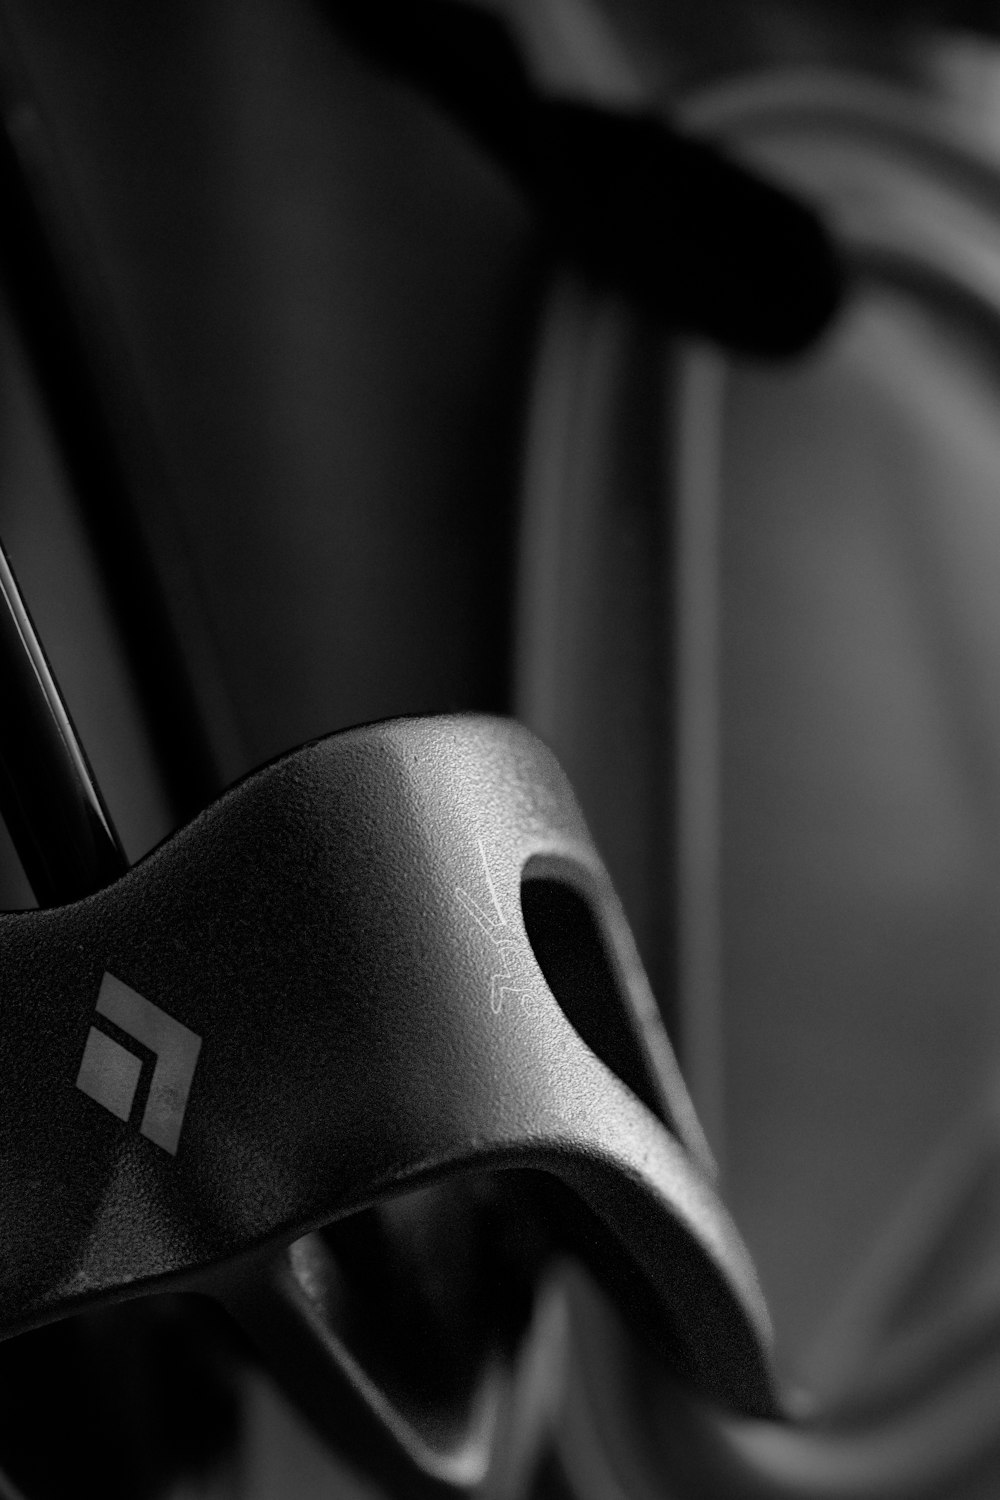 a black and white photo of a bike handle